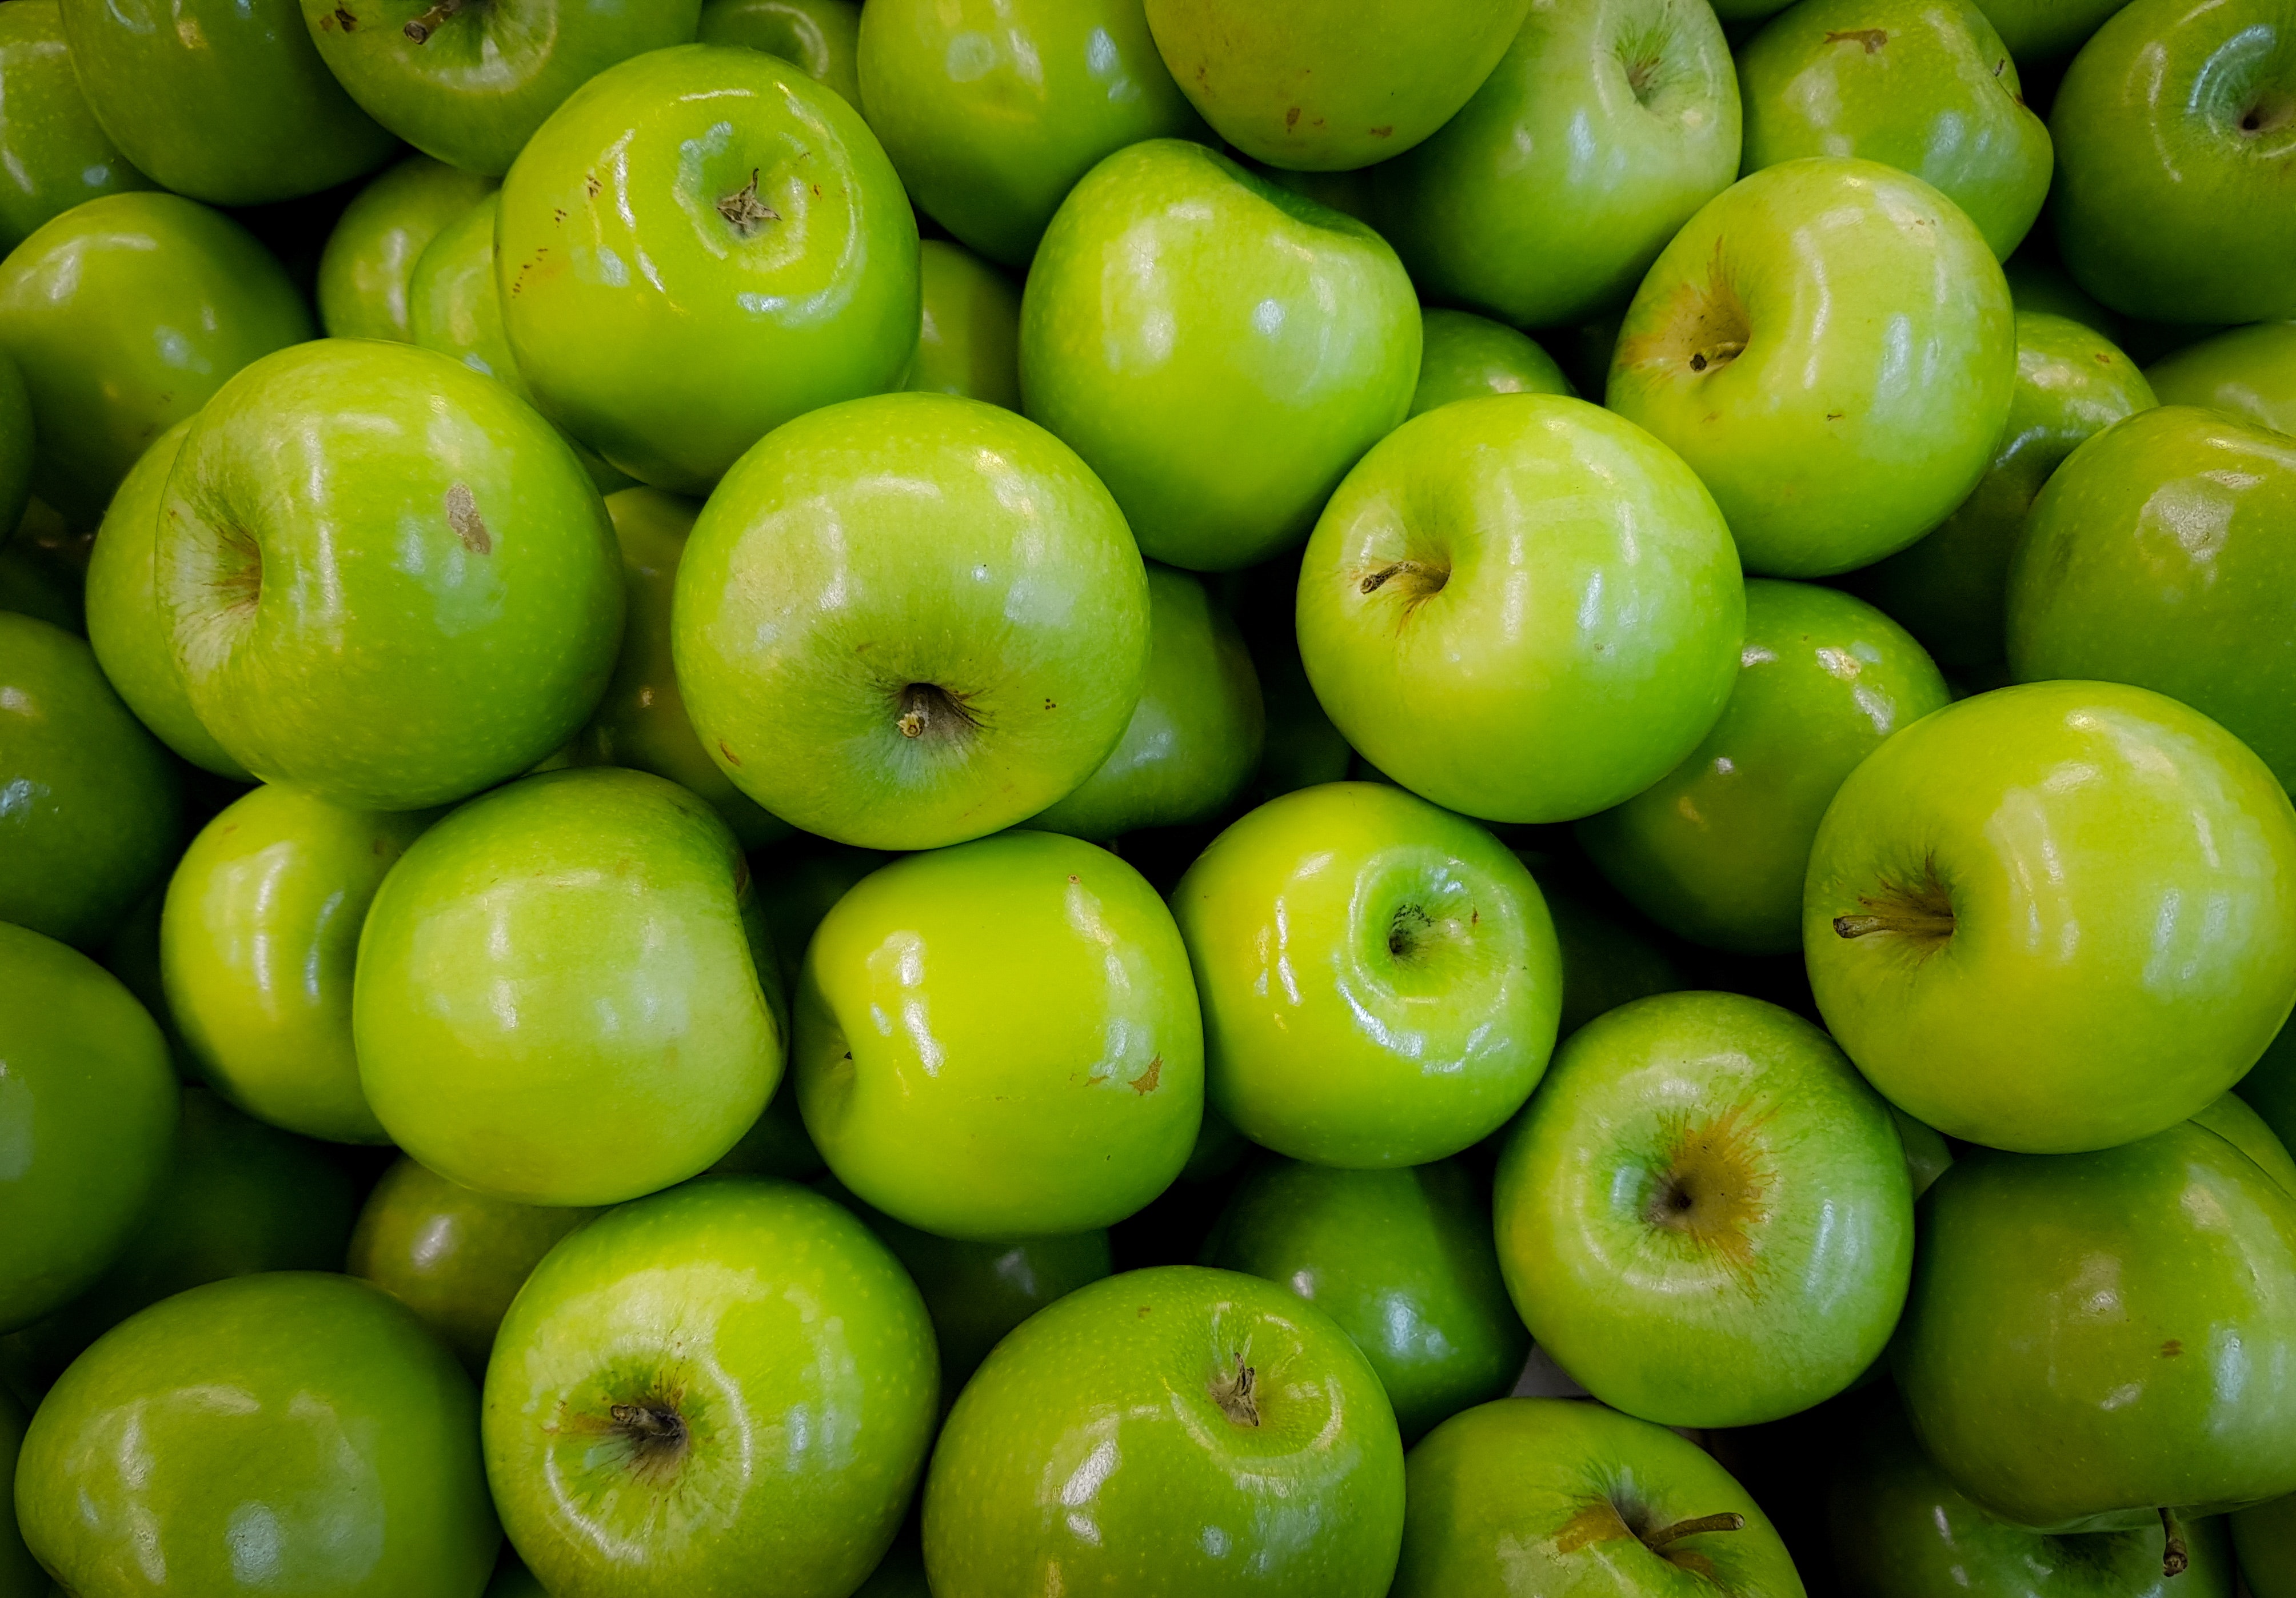 abundance-apples-close-up-693794.jpg